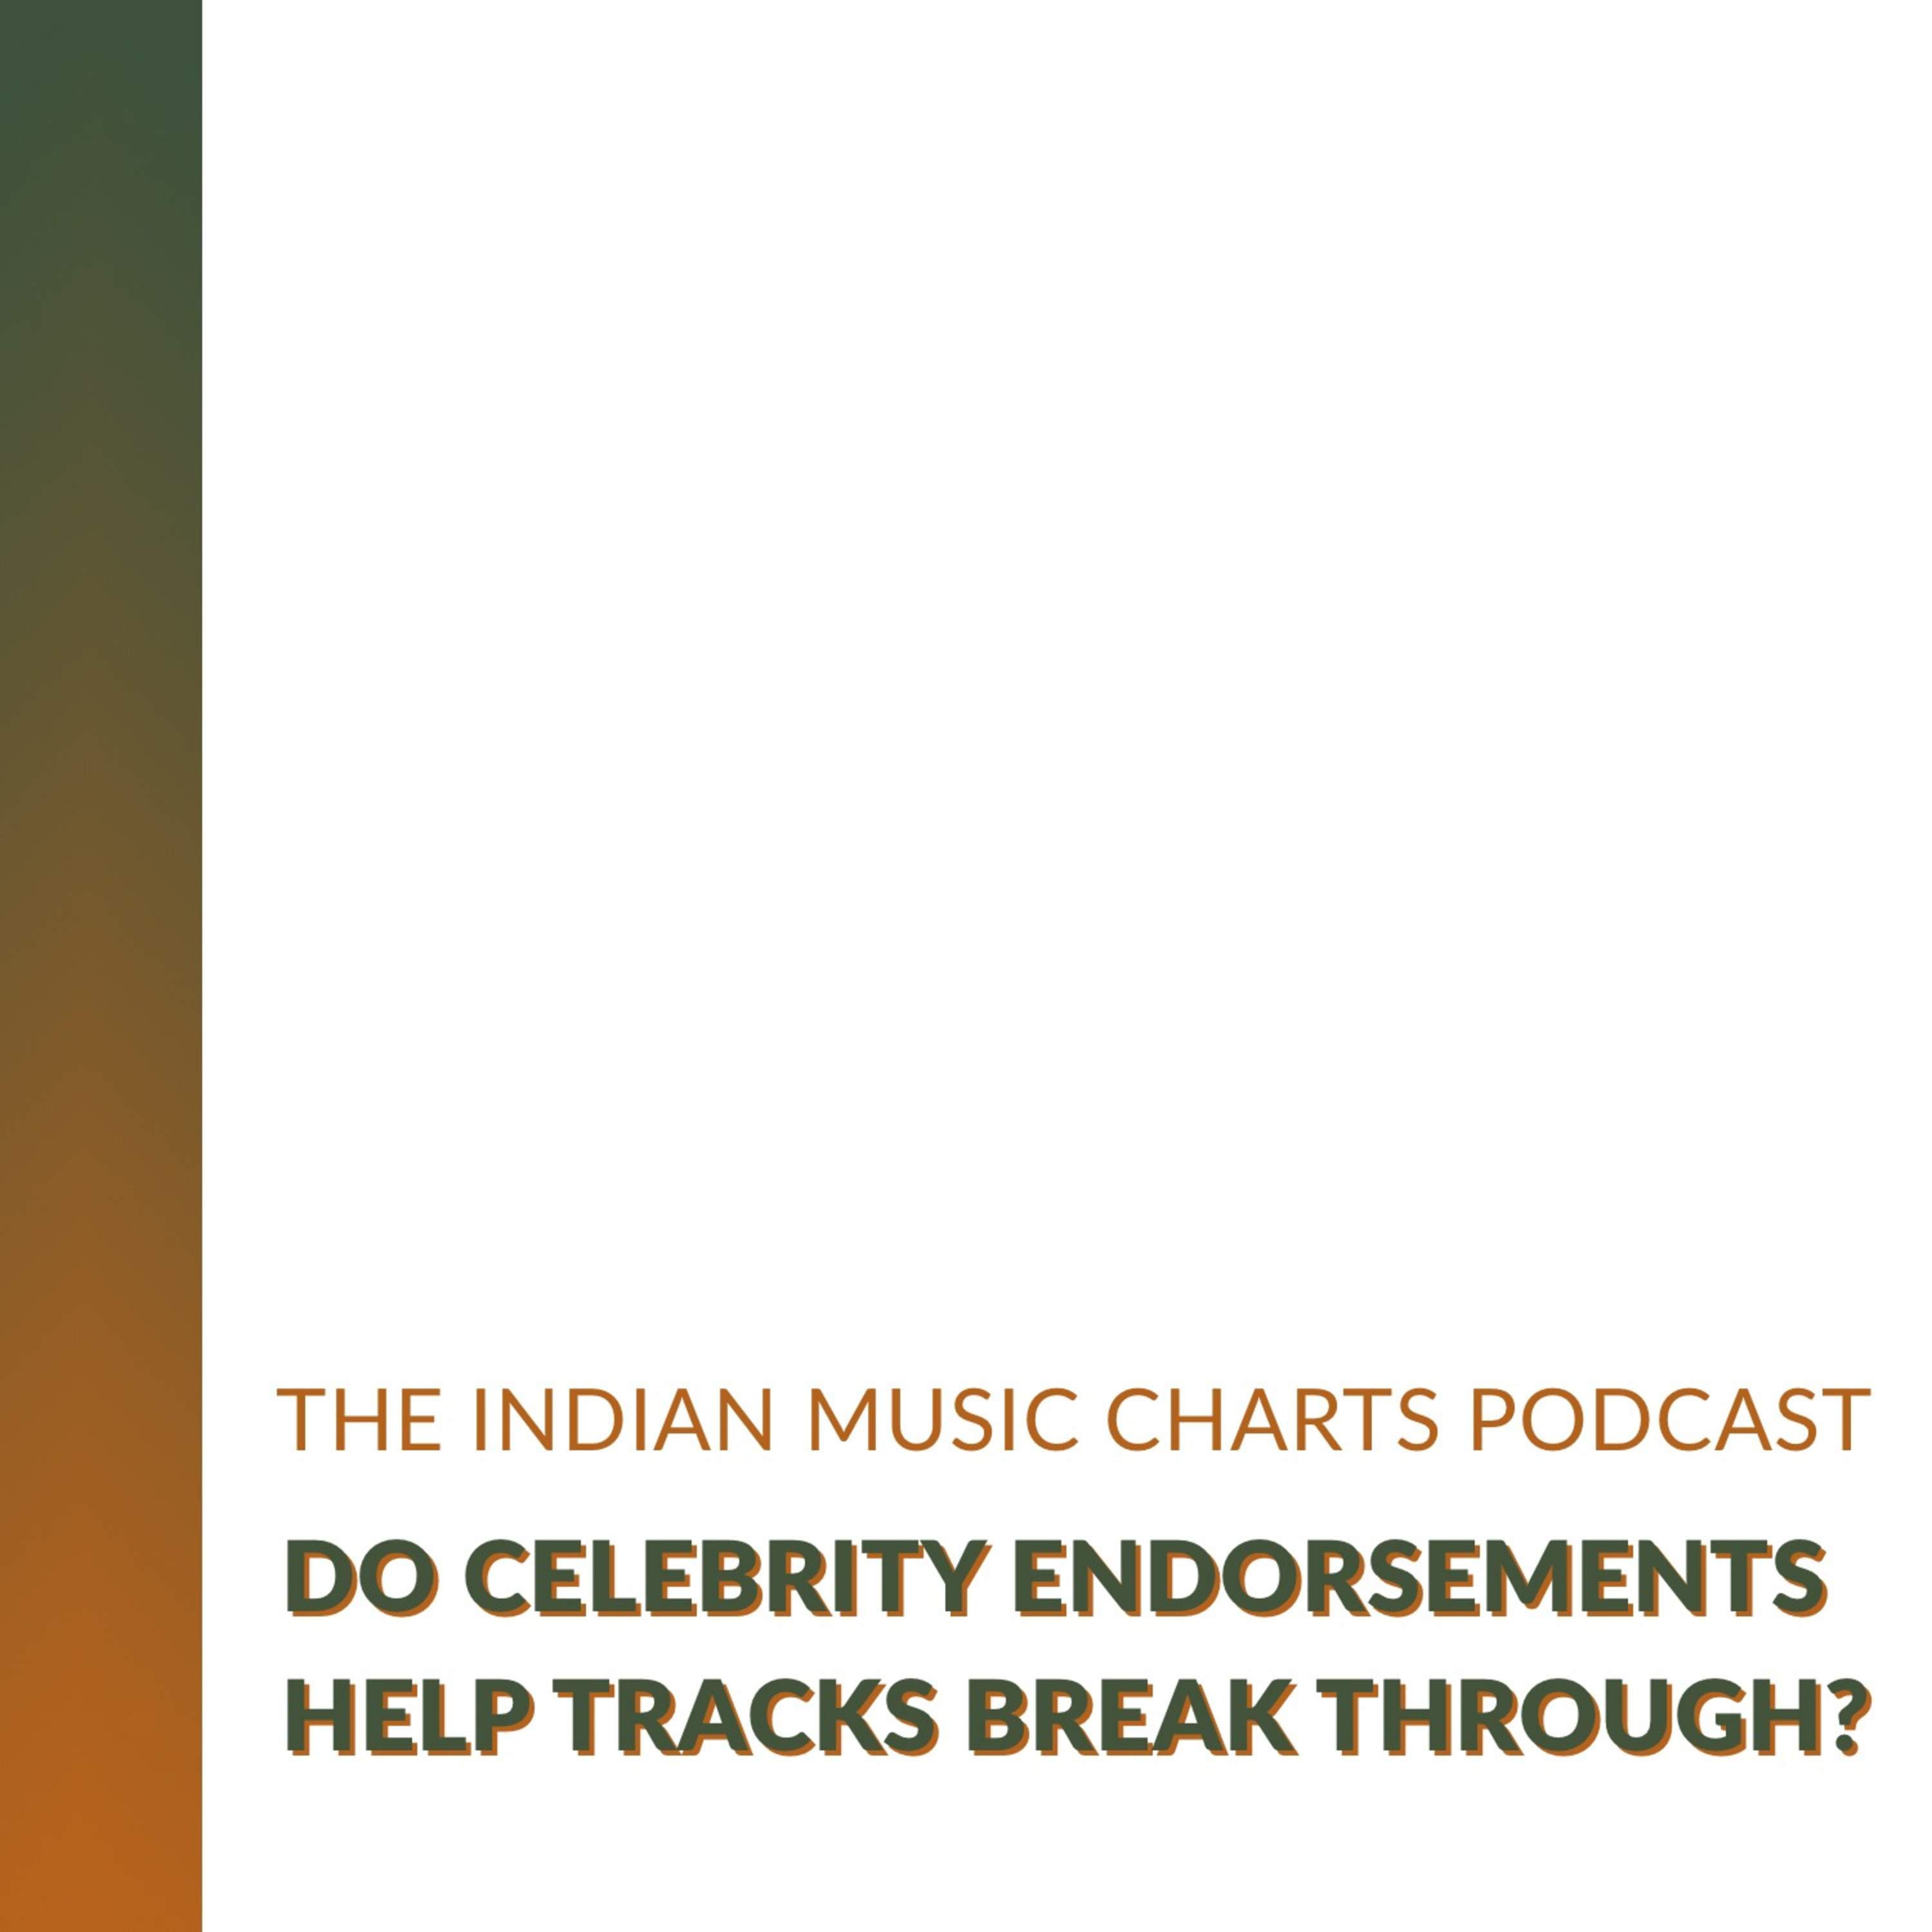 Do celebrity endorsements help tracks break through?